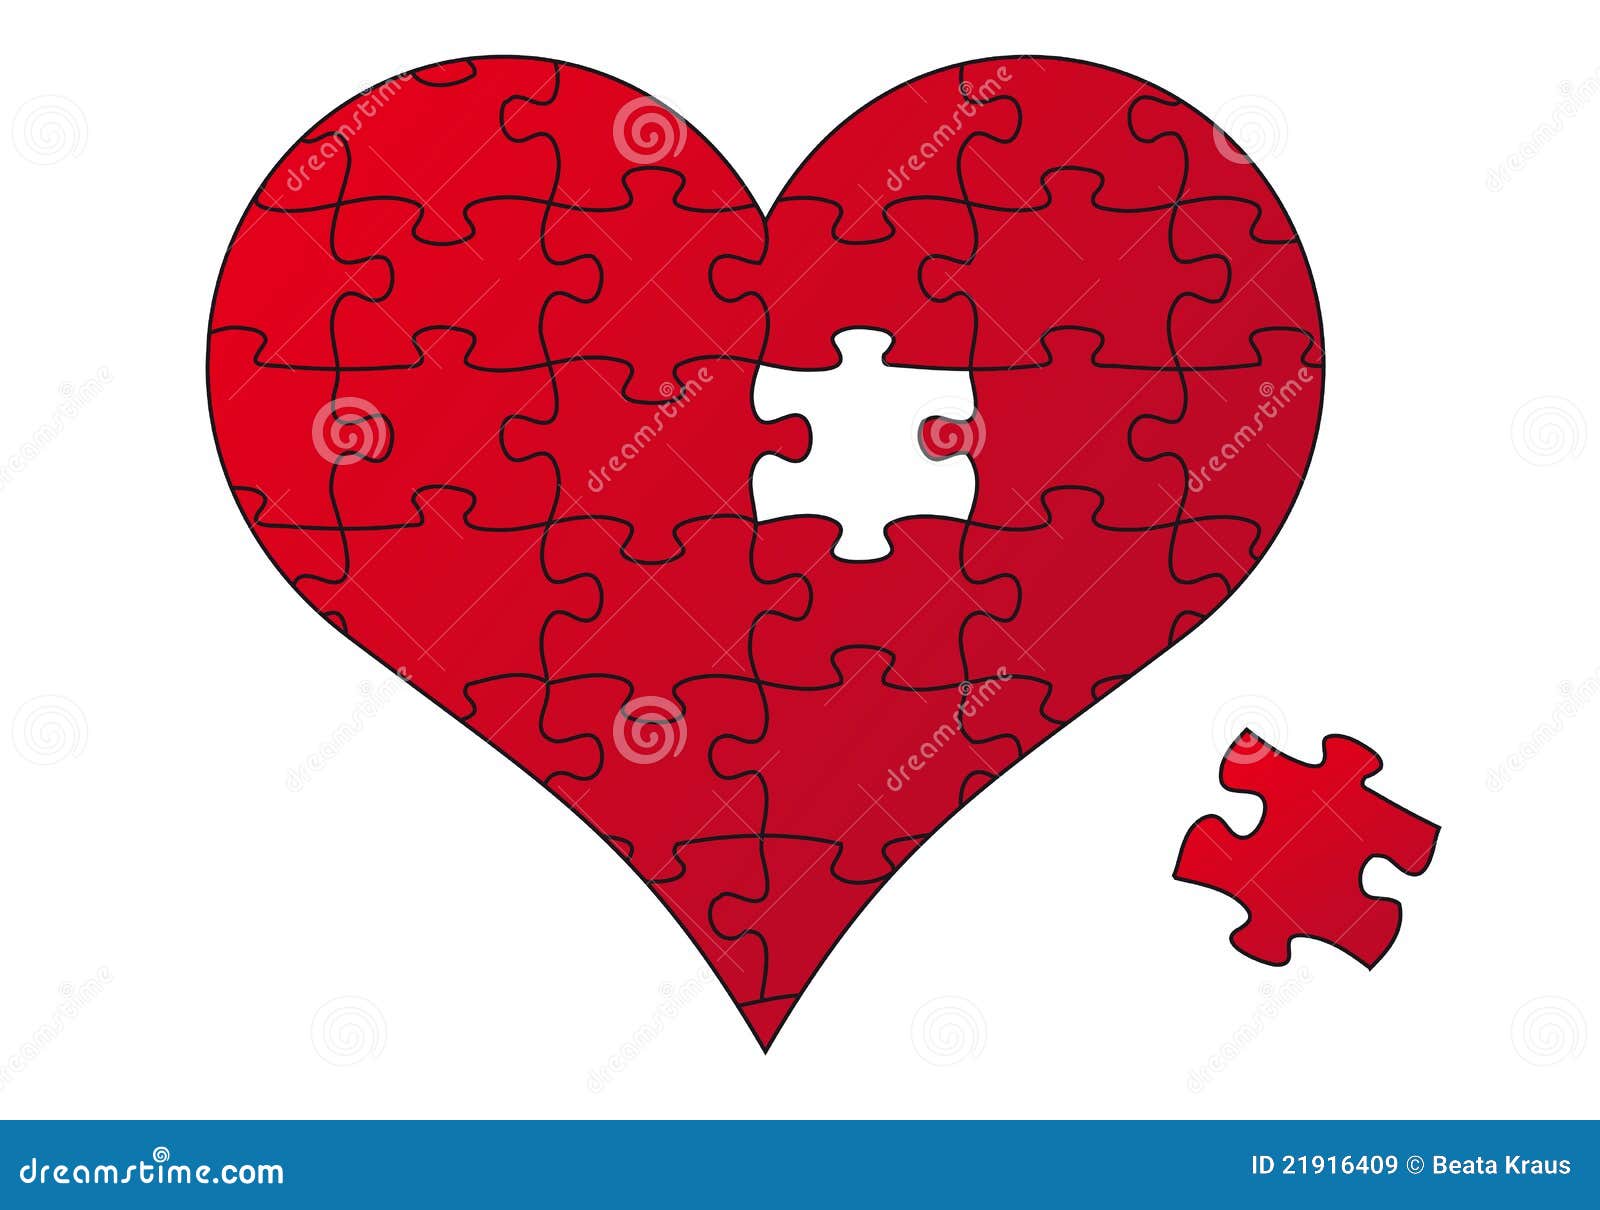 heart puzzle clipart - photo #18